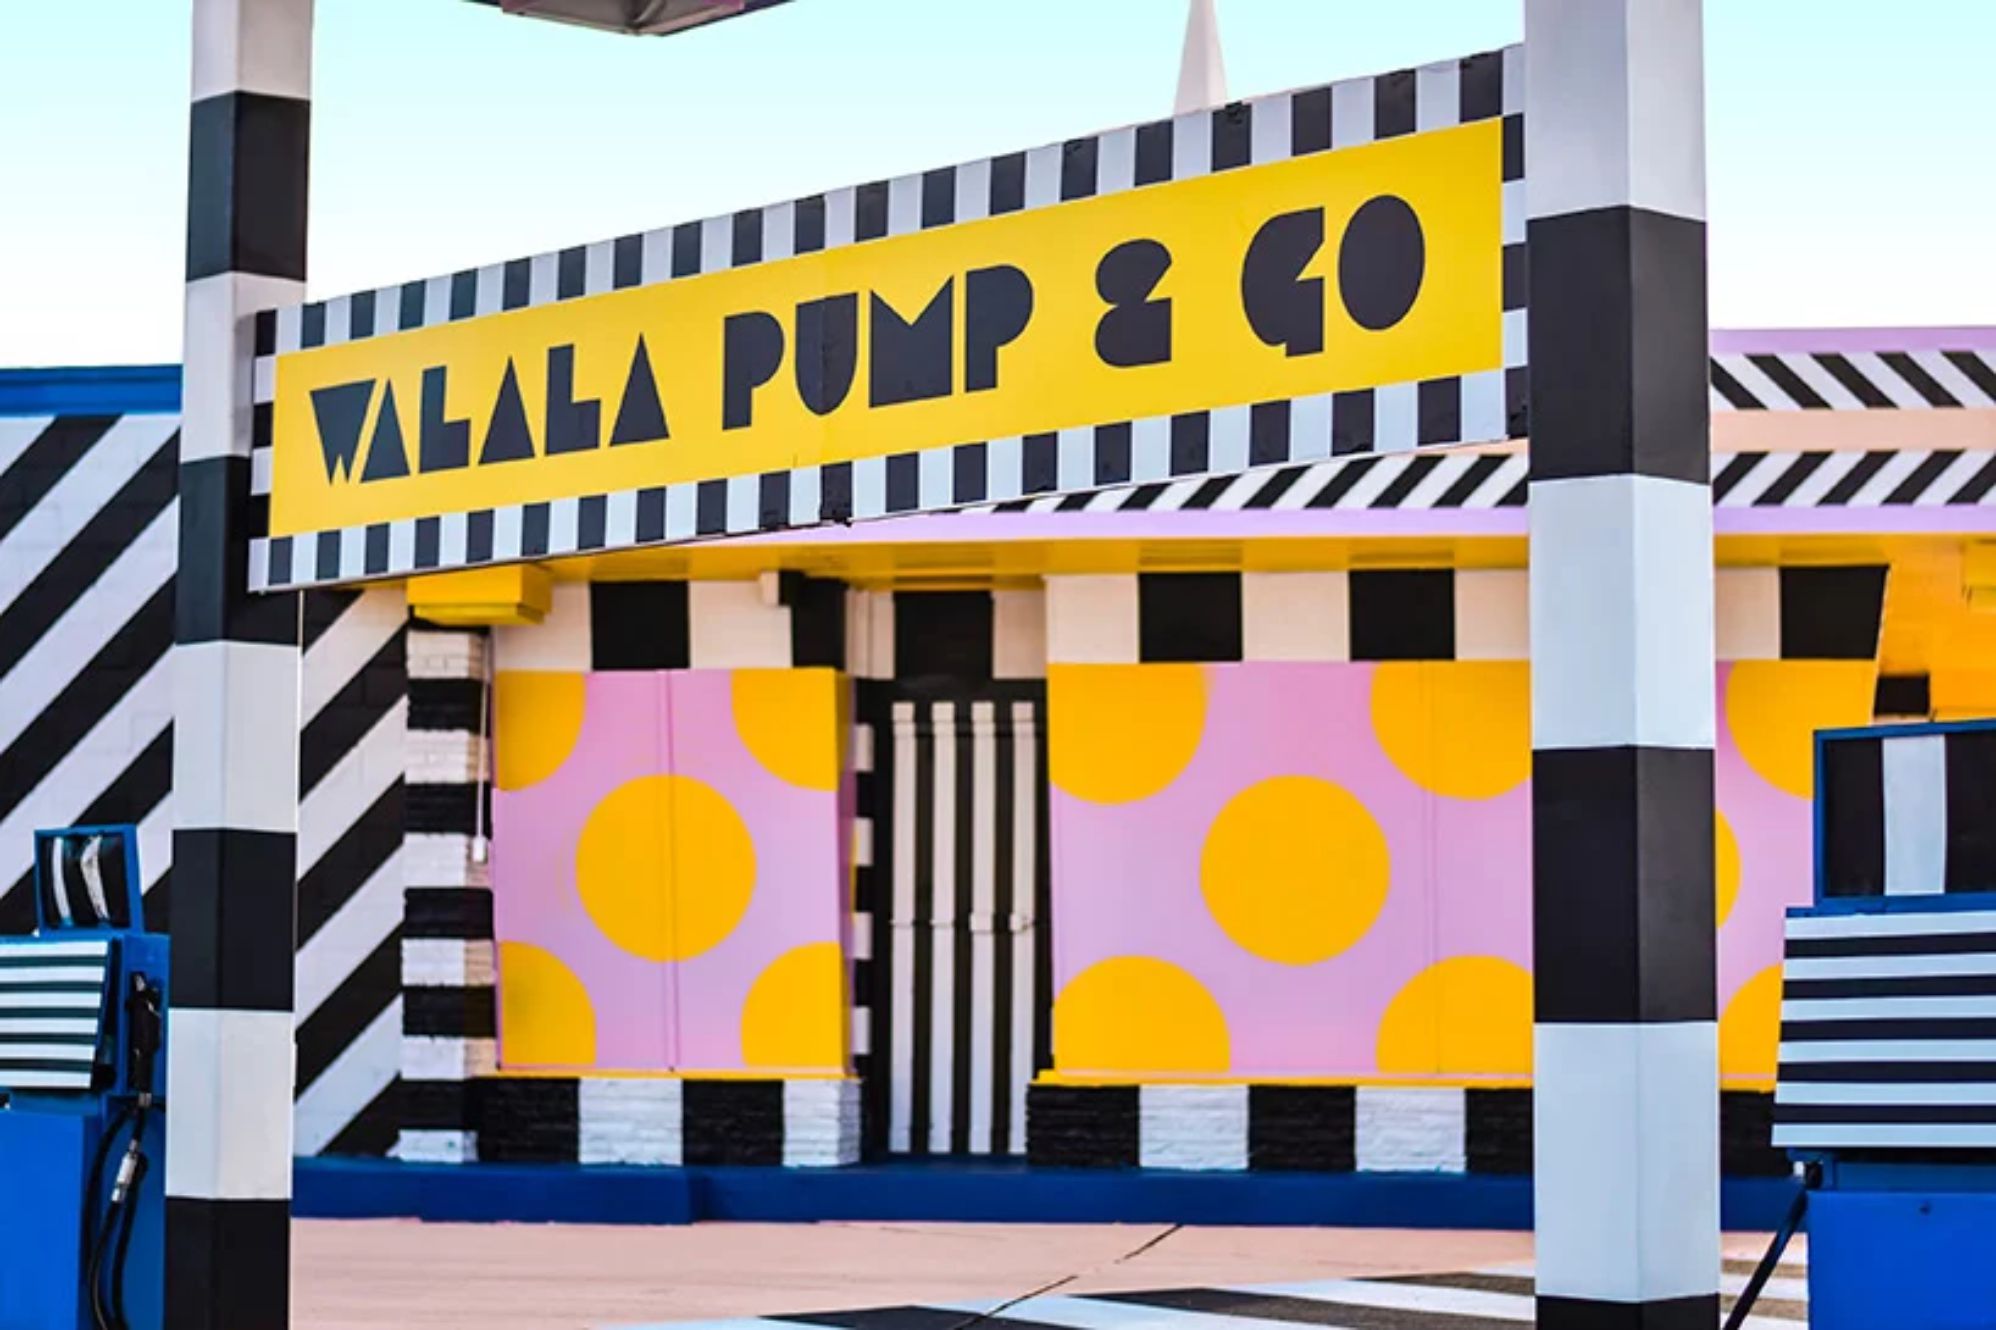 walala pump & go, instalasi baru karya camile walala